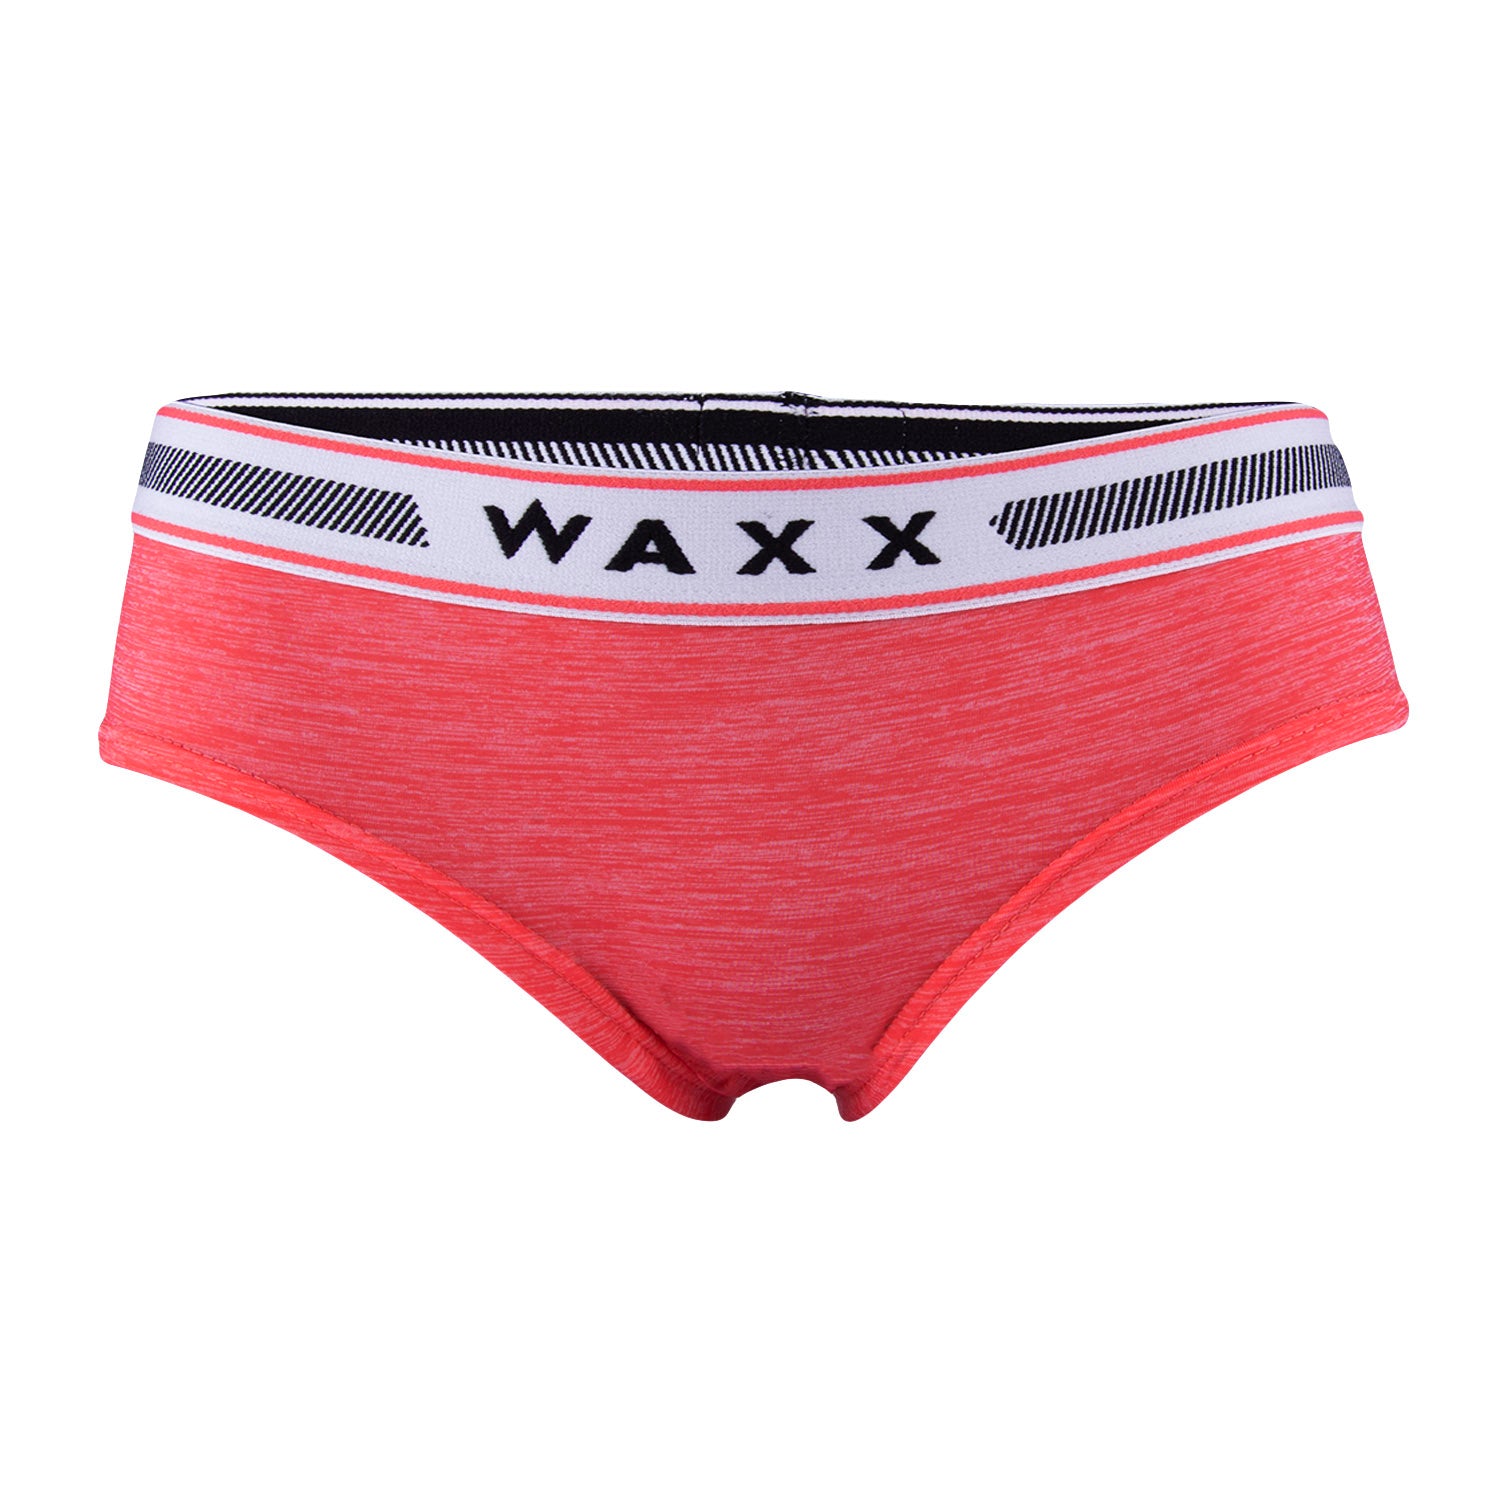 Waxx Women's Boy Short Coral